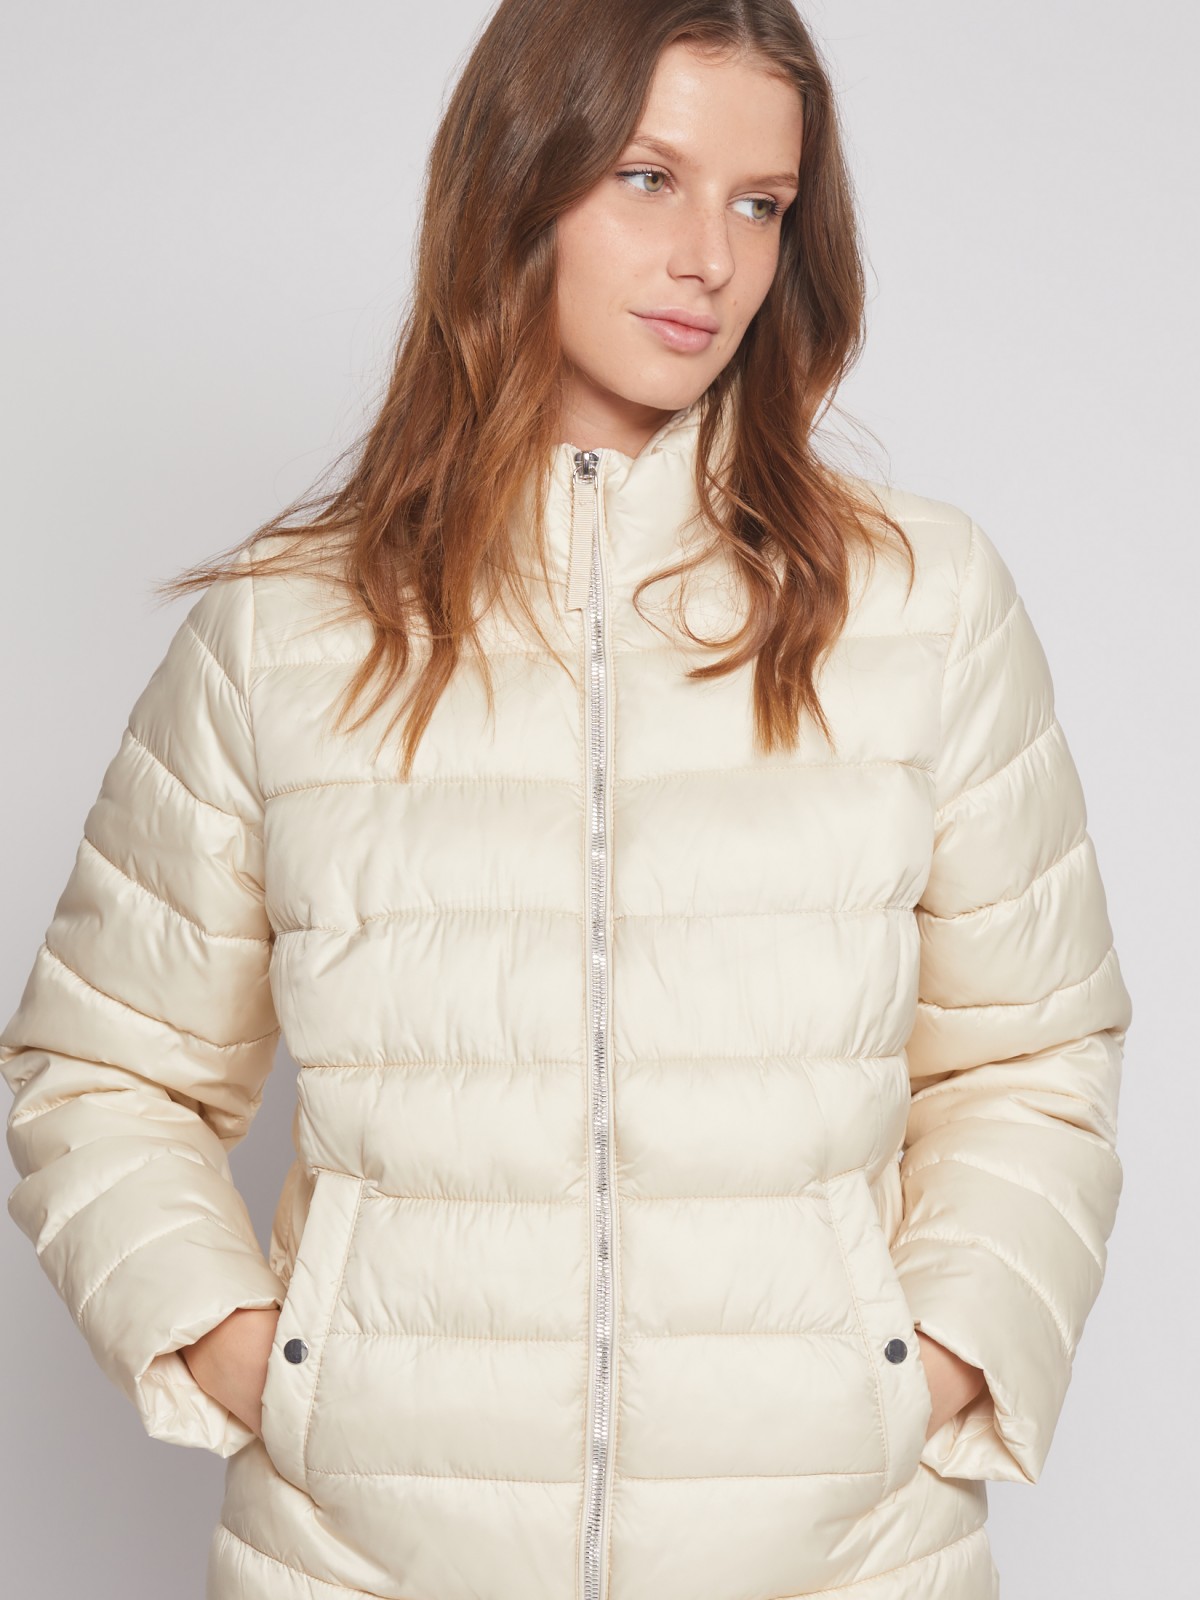 Утеплённая стёганая куртка zolla 022335112034, цвет молоко, размер S - фото 3